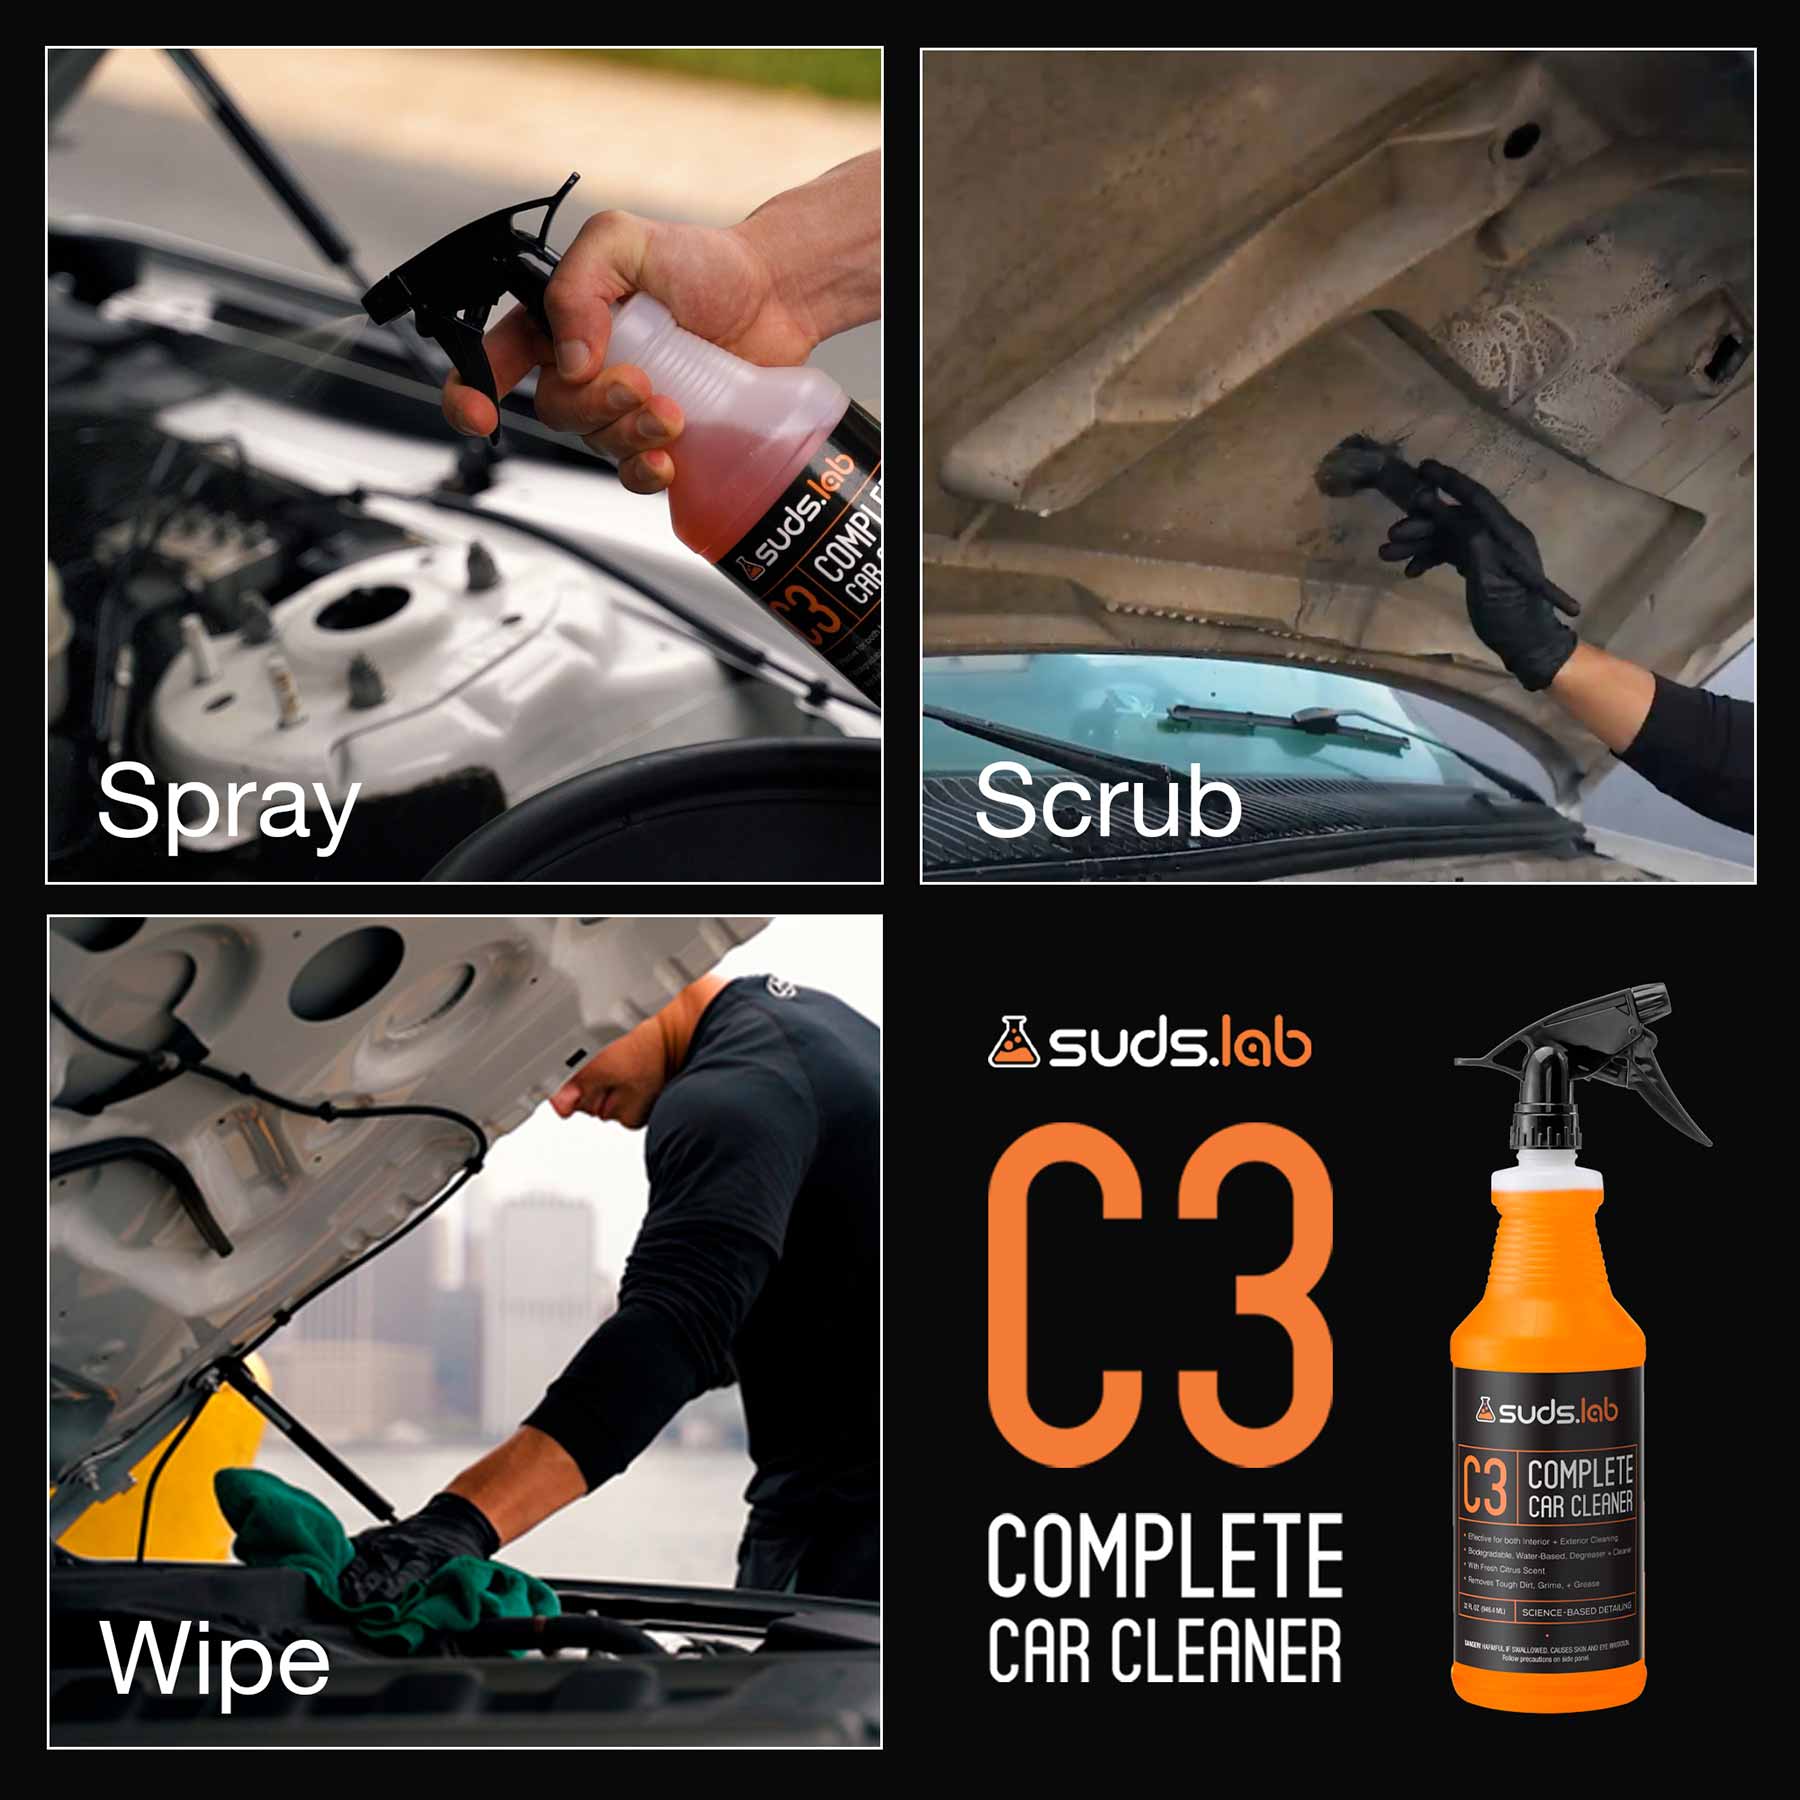  Suds Lab DS Microfiber Detailing Scrub Pad 3 Pack - Car  Interior Cleaning & Detailing Microfiber Scrub Pads - Set of 3 - Safe On  Leather, Vinyl, Plastic, Etc. : Automotive